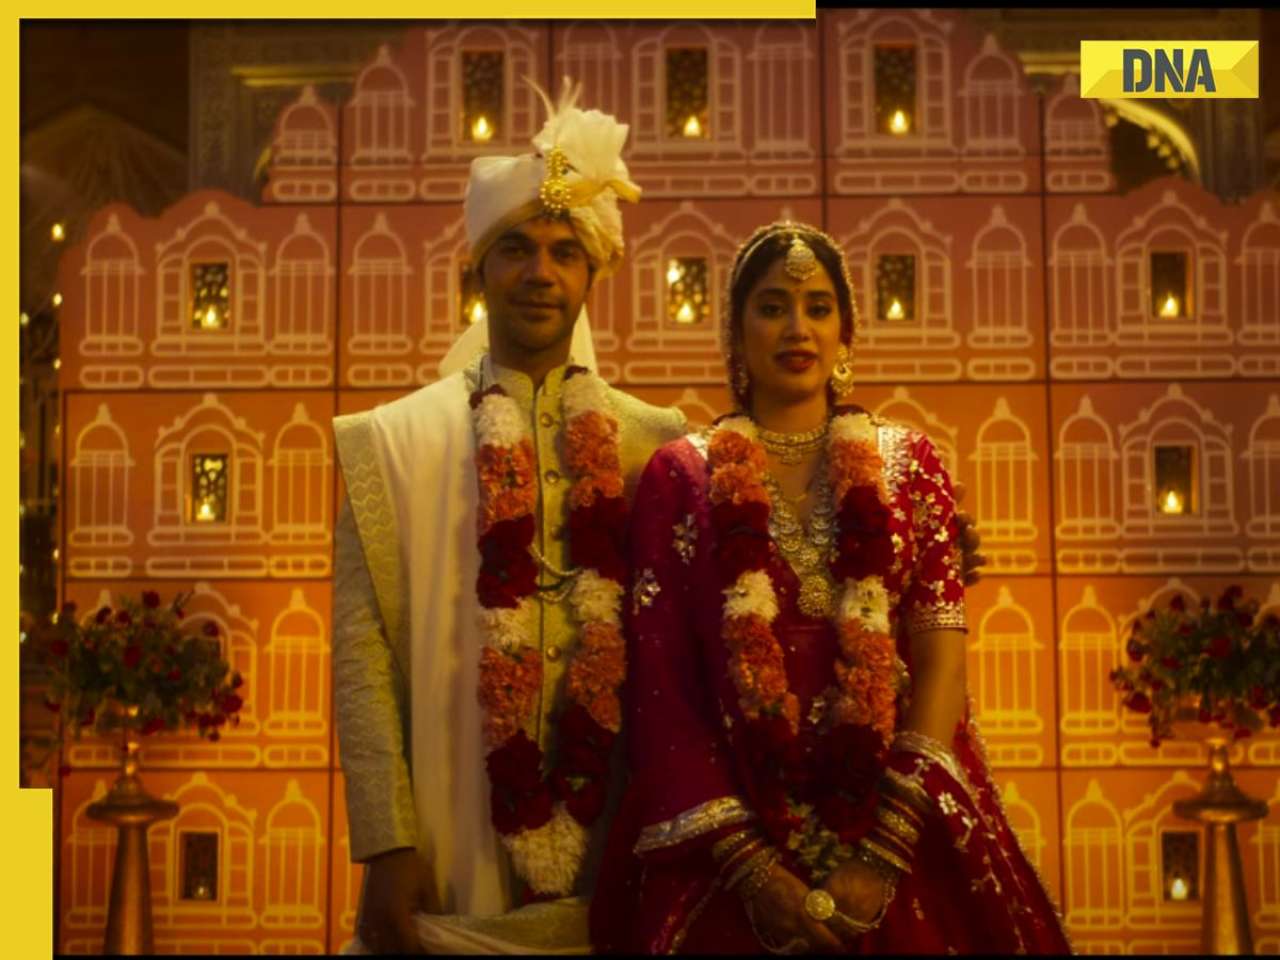 Mr & Mrs Mahi trailer: Rajkummar Rao, Janhvi Kapoor's sports drama is about love, relationships and unfulfilled dreams